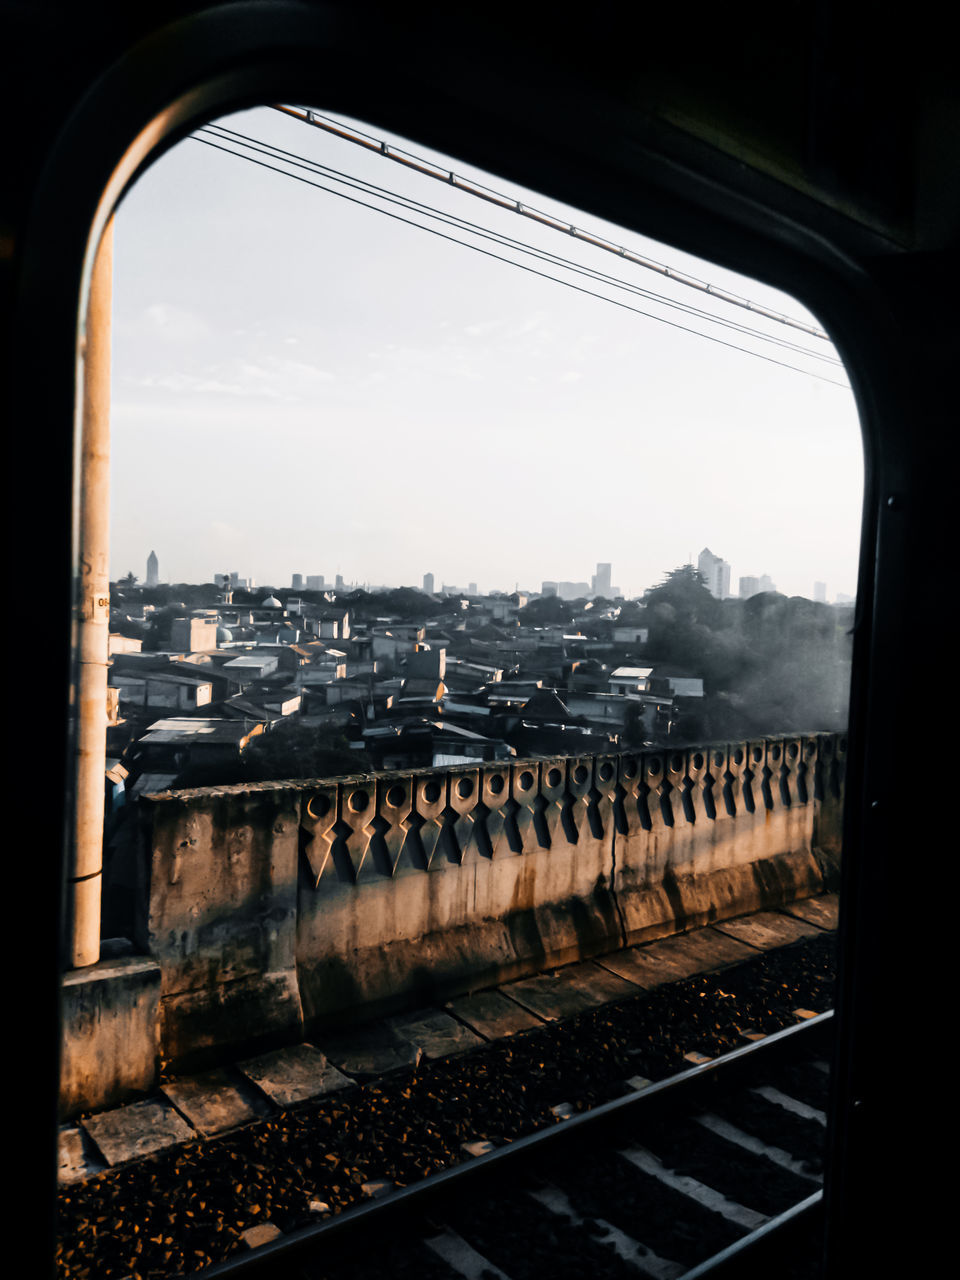 VIEW OF RAILROAD TRACKS SEEN THROUGH TRAIN WINDOW